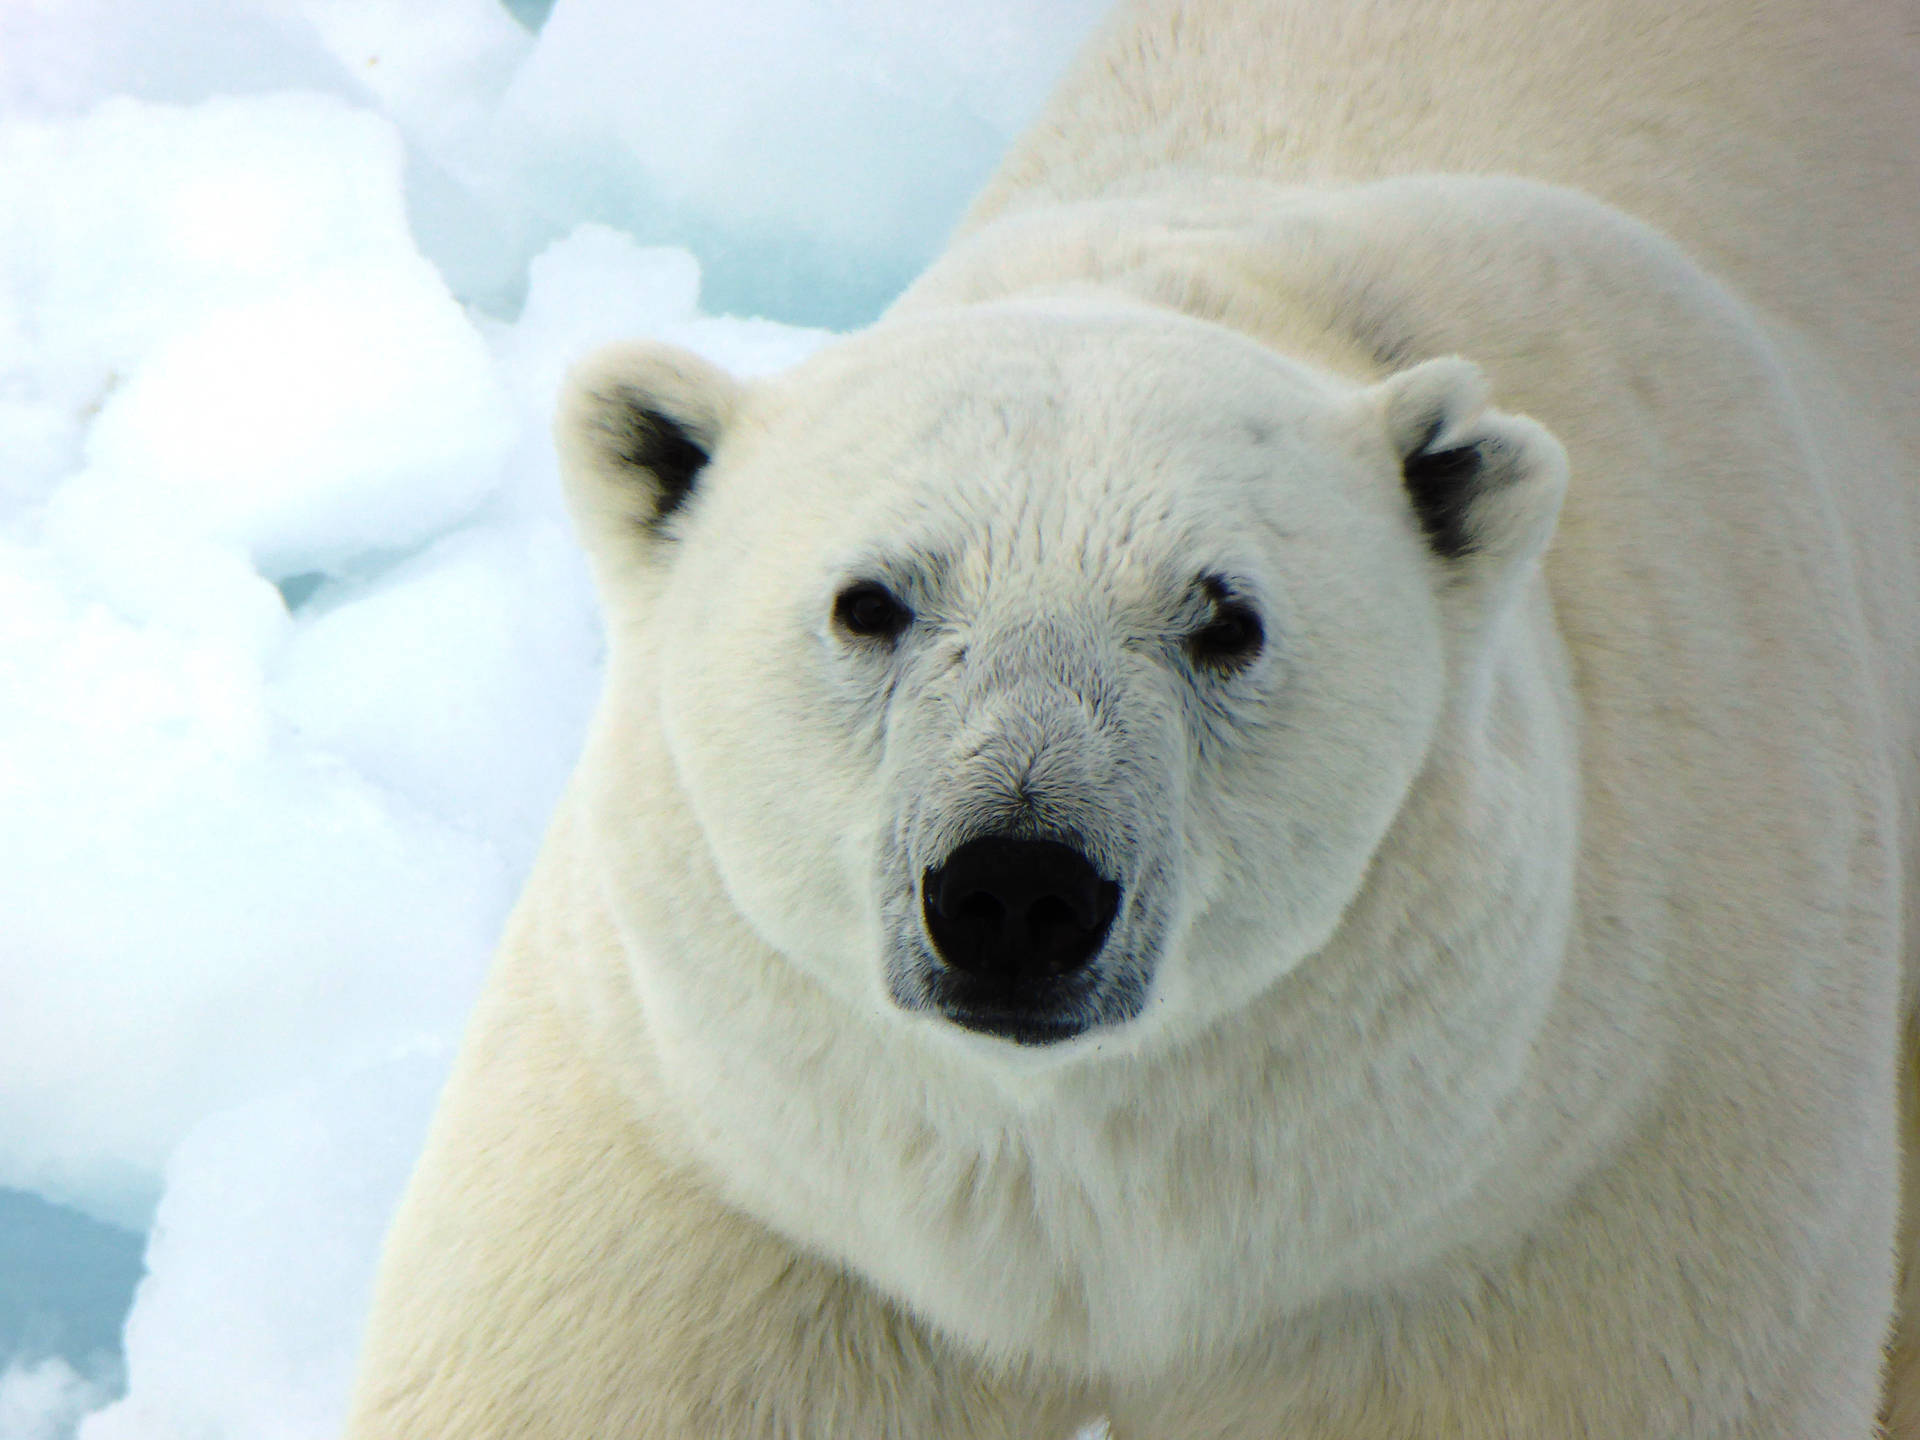 “Close up of a Polar Bear in its natural habitat.” Wallpaper